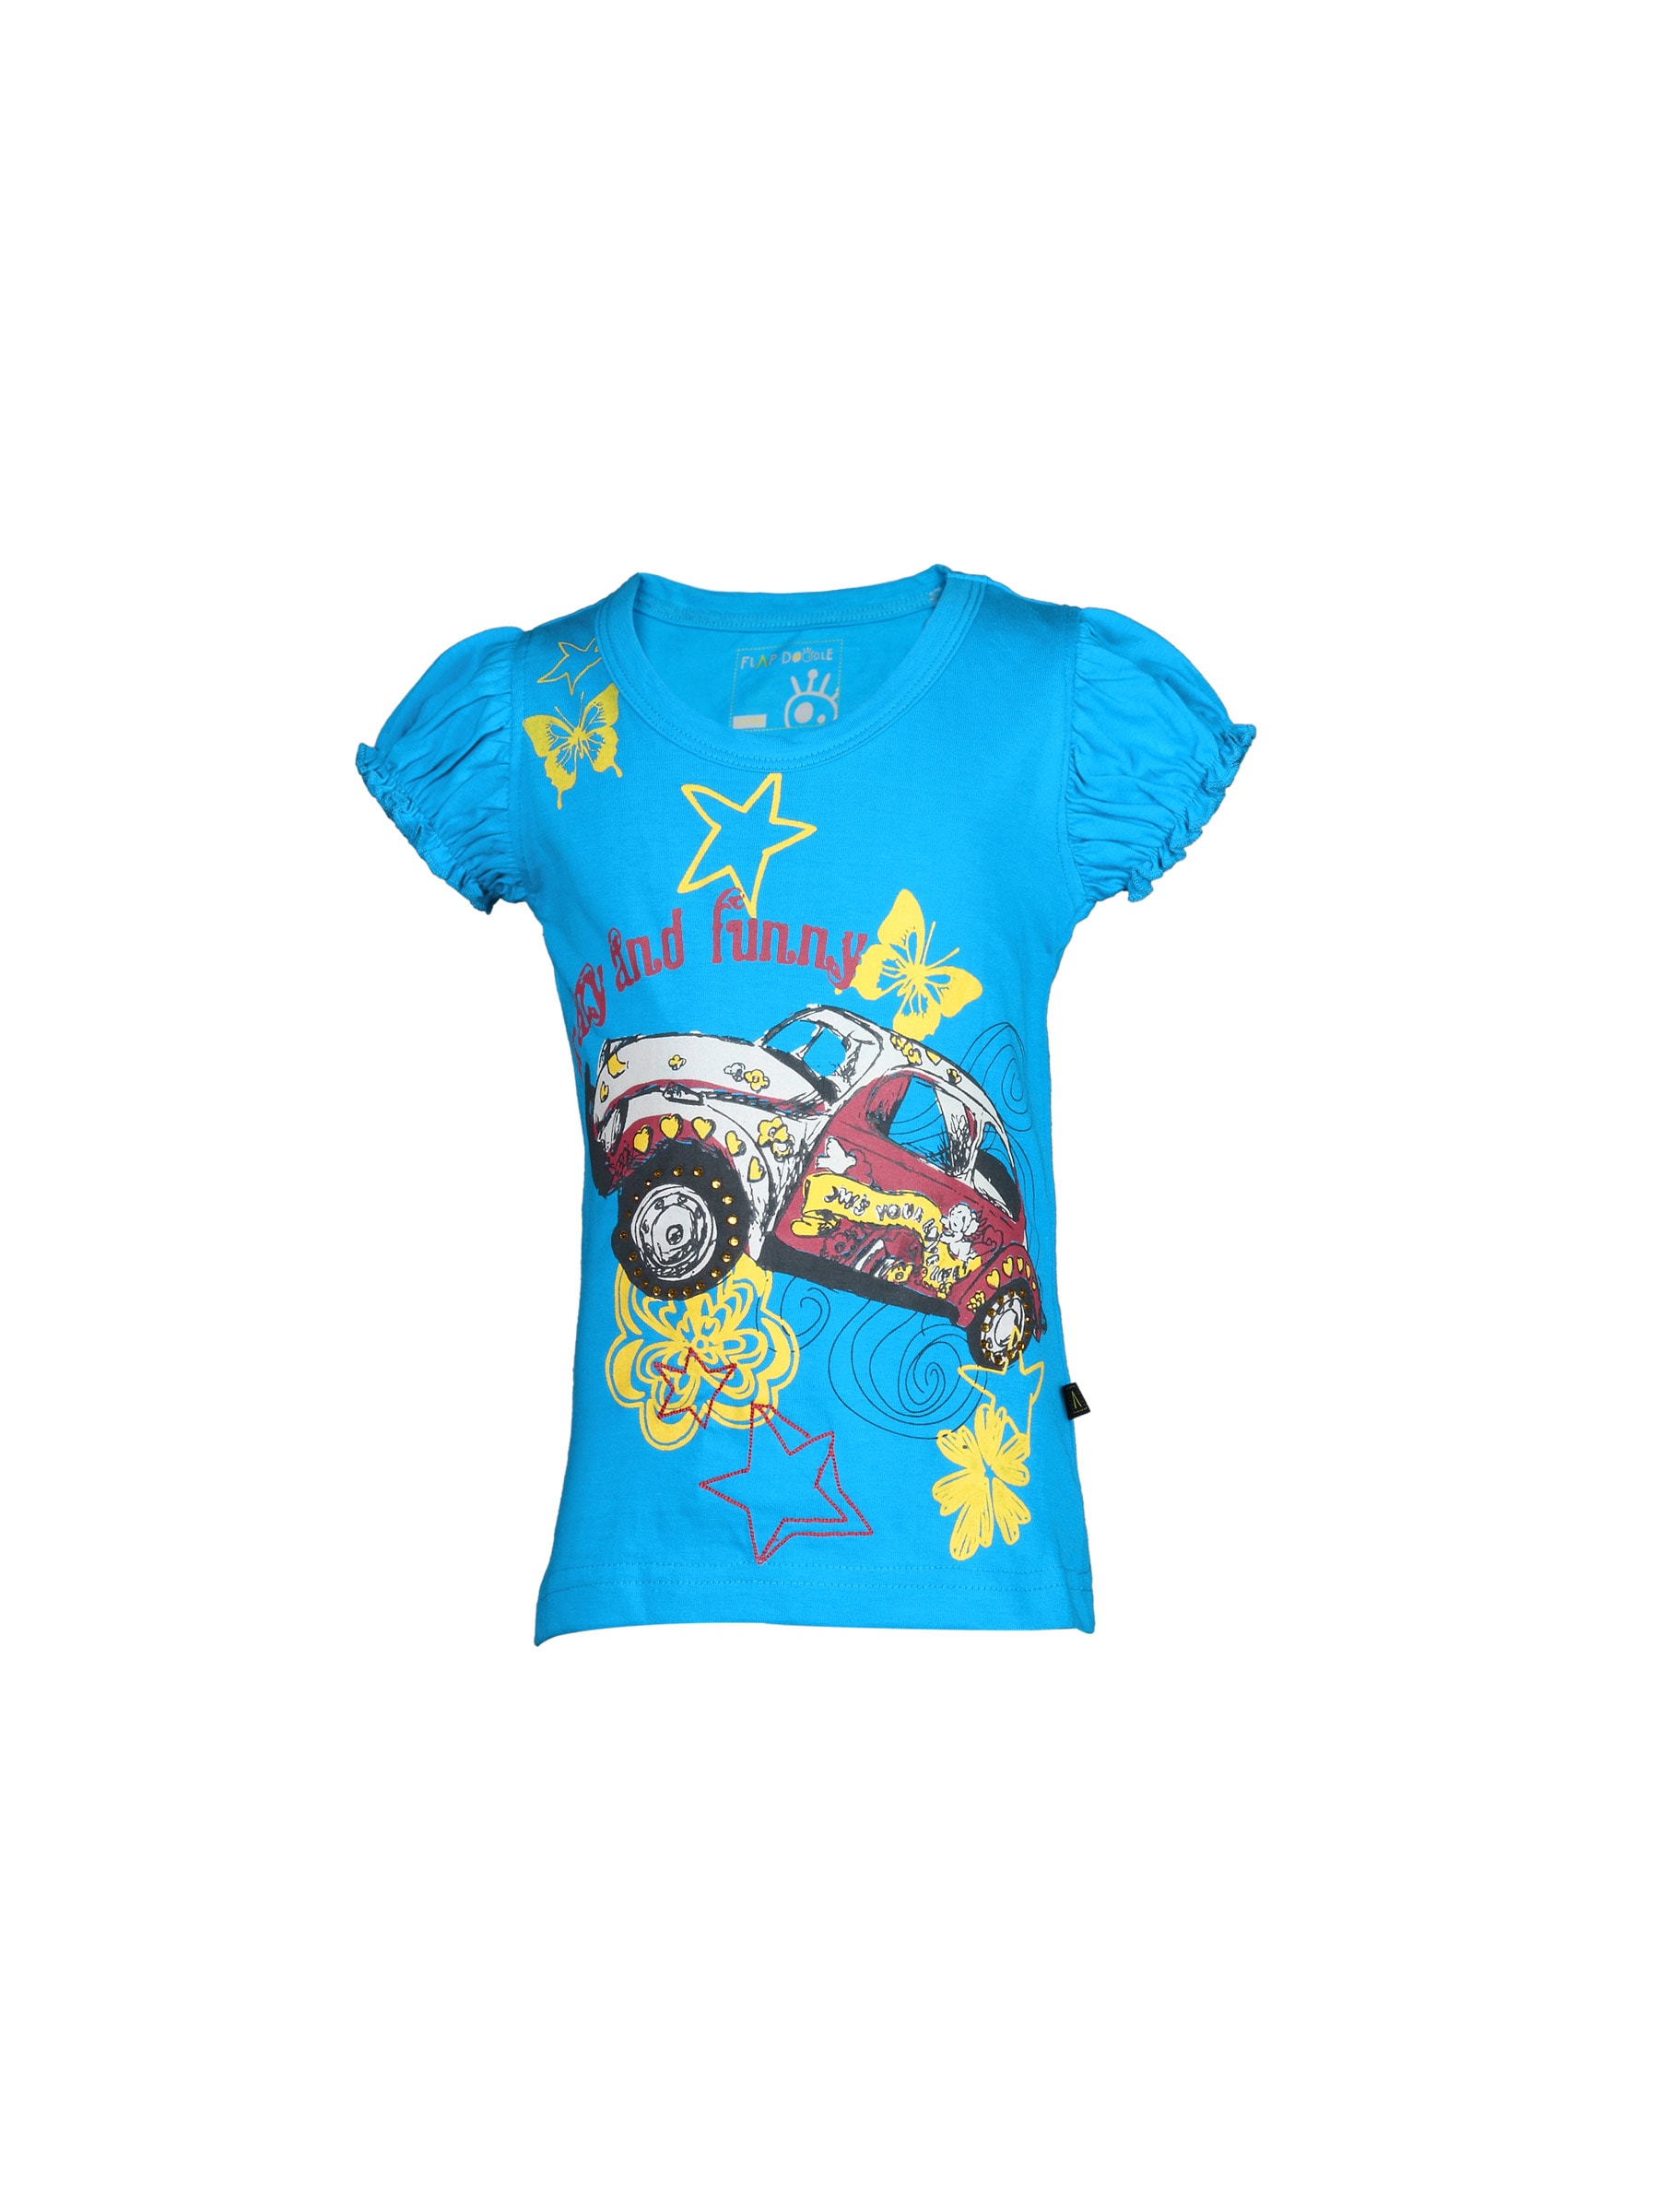 Doodle Girl's Crazy Funny Blue Teen Kidswear